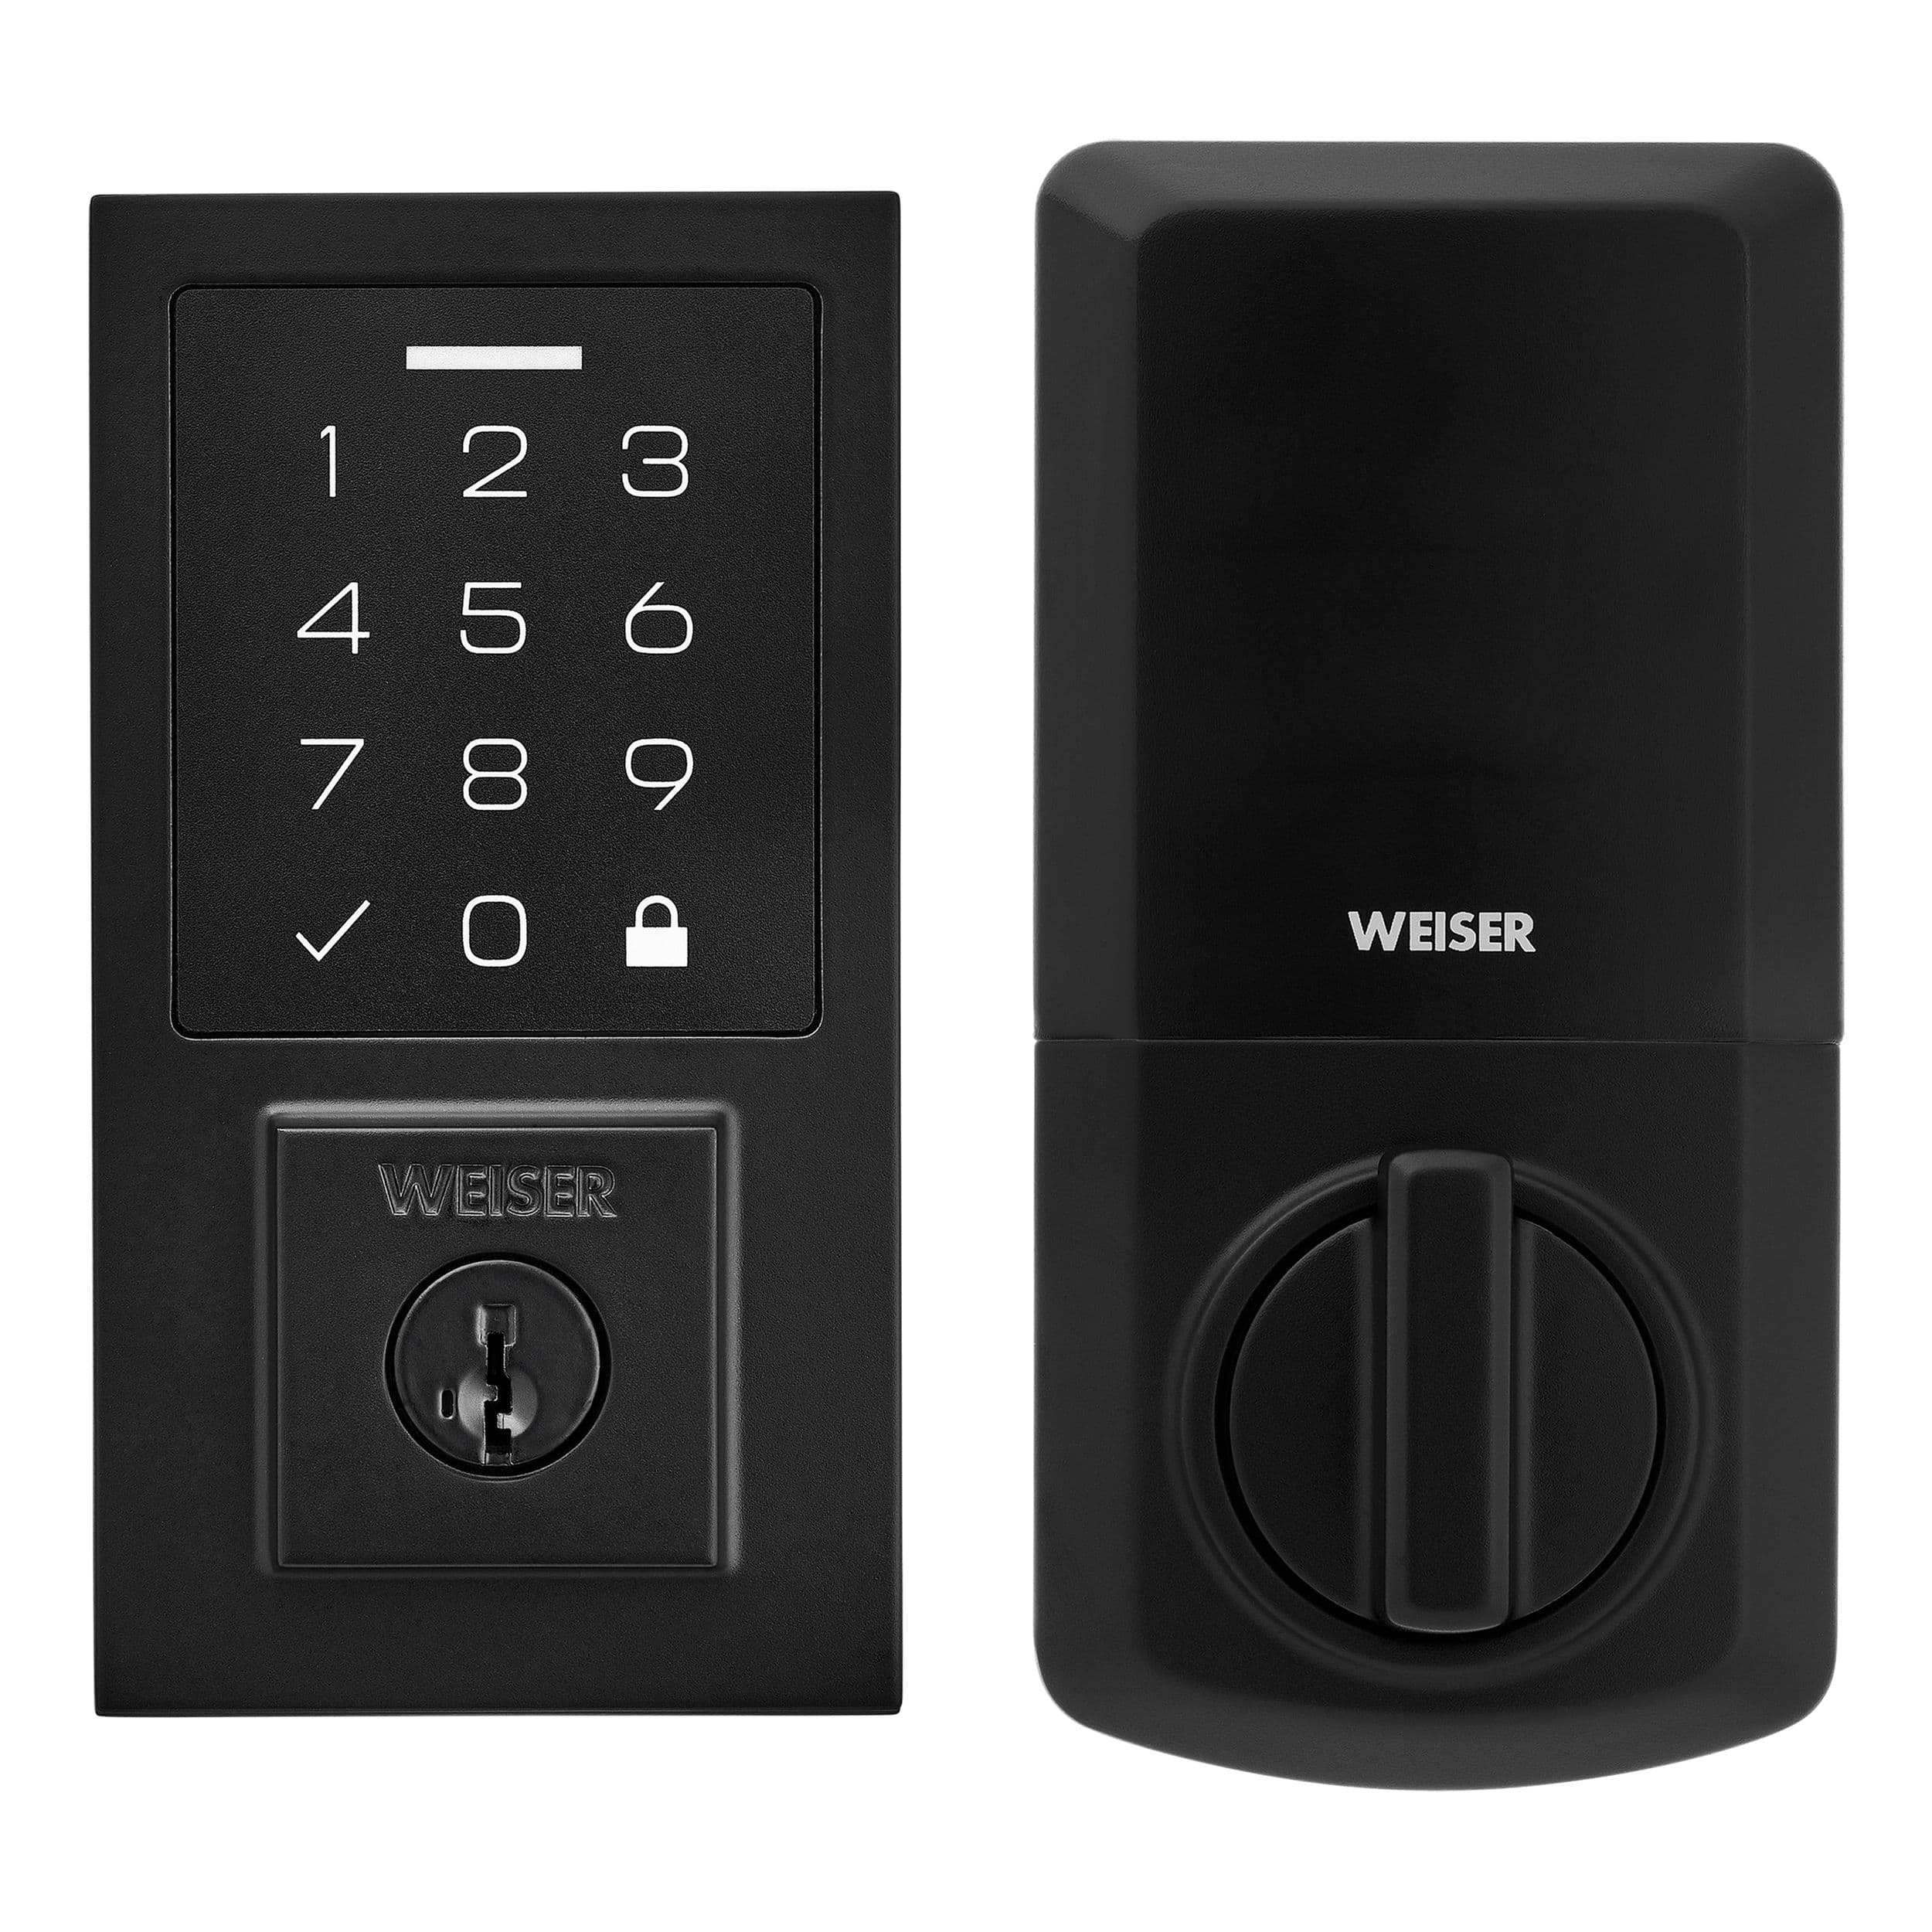 Weiser Smartcode Contemporary Touchpad Electronic Deadbolt Door